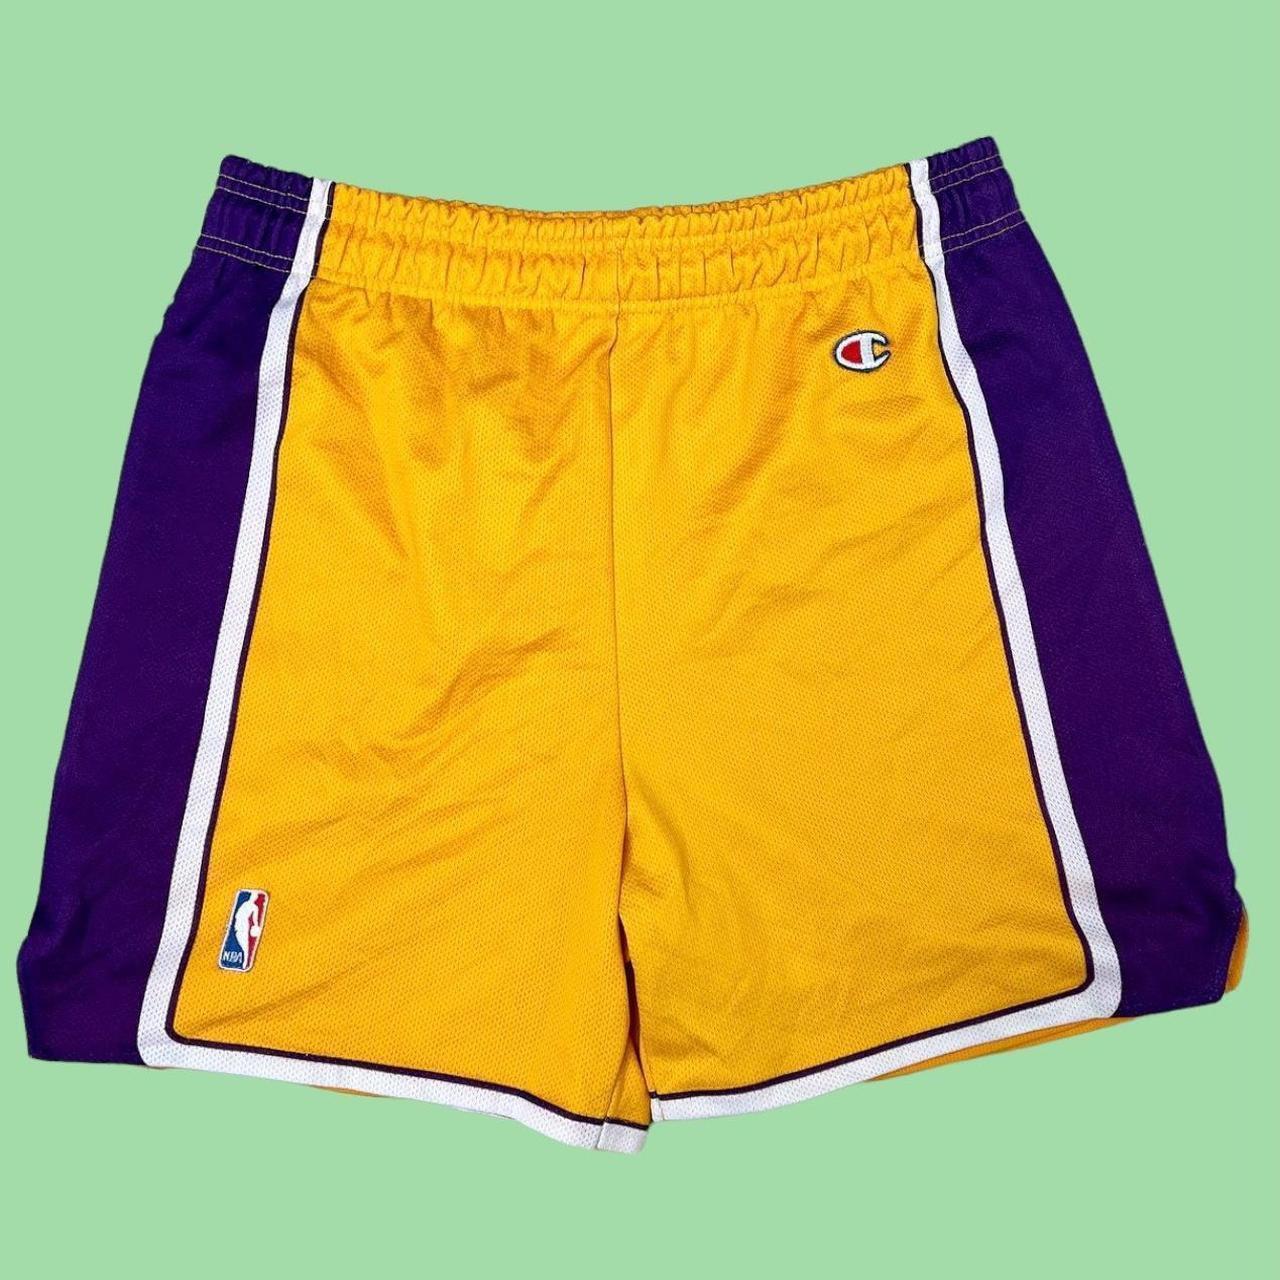 Vintage La Lakers Basketball shorts Rare vintage... - Depop